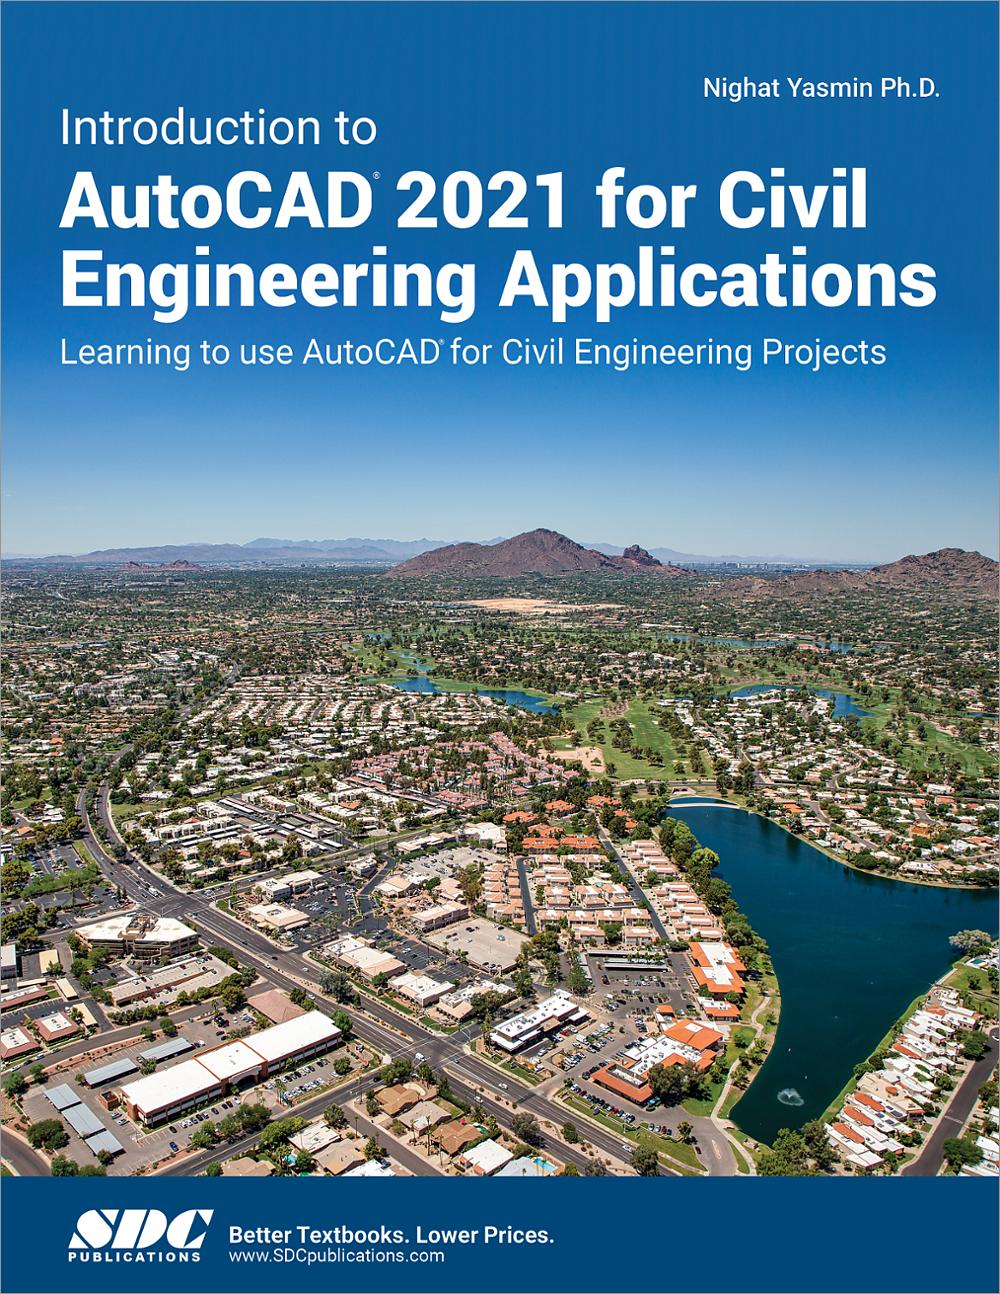 autocad 2021 tutorial first level 2d fundamentals